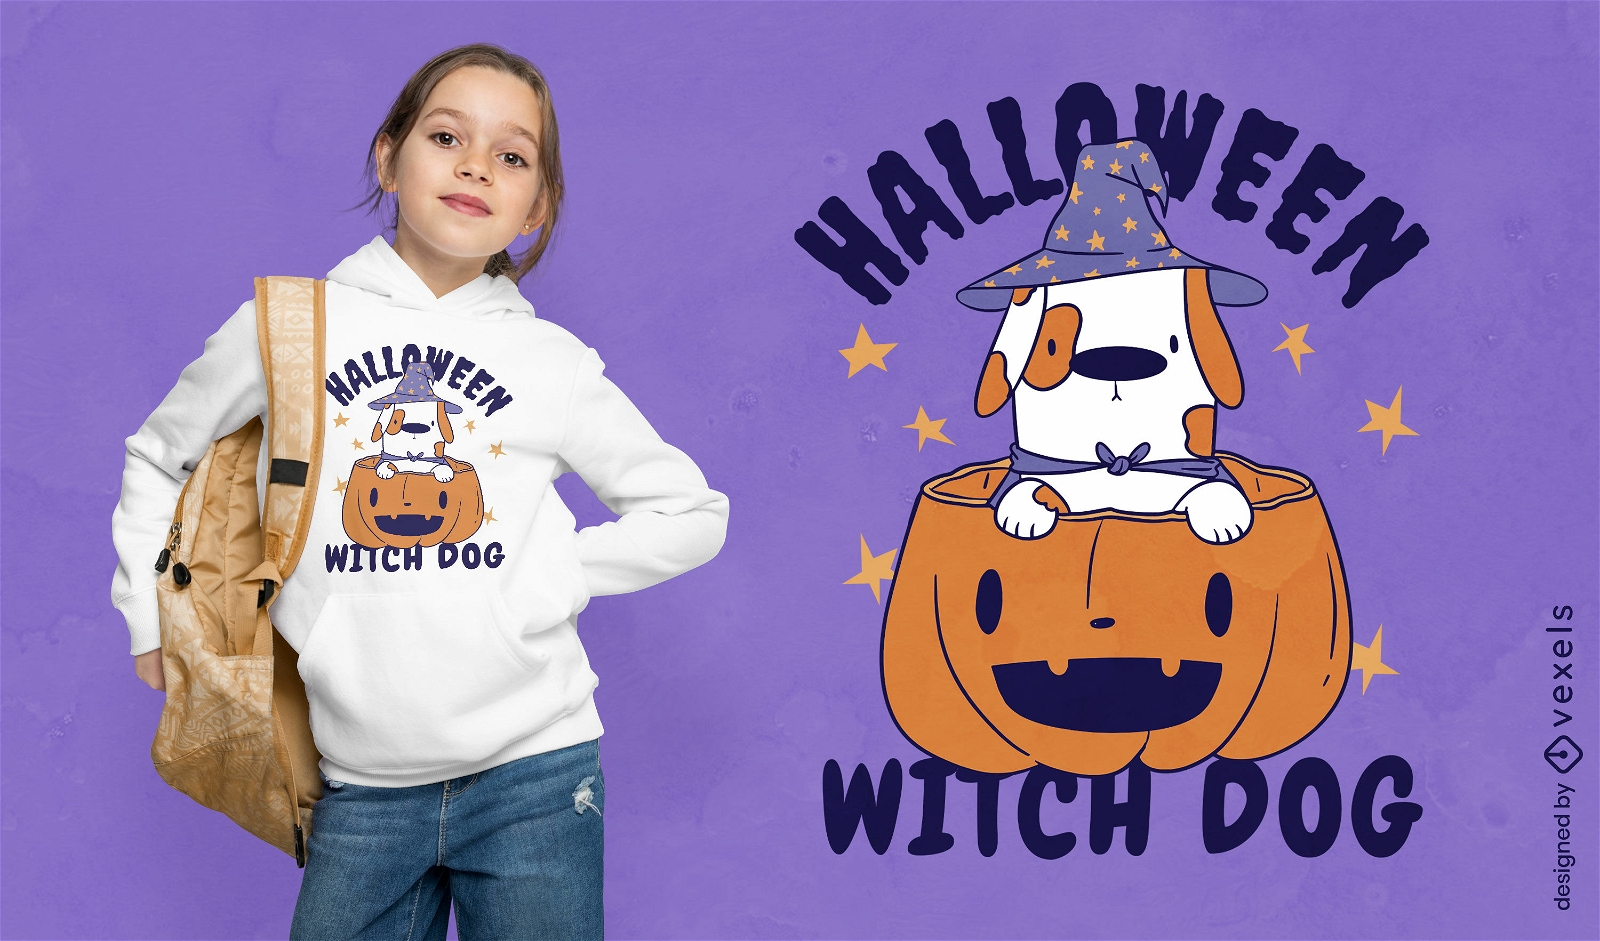 Witch dog Halloween t-shirt design